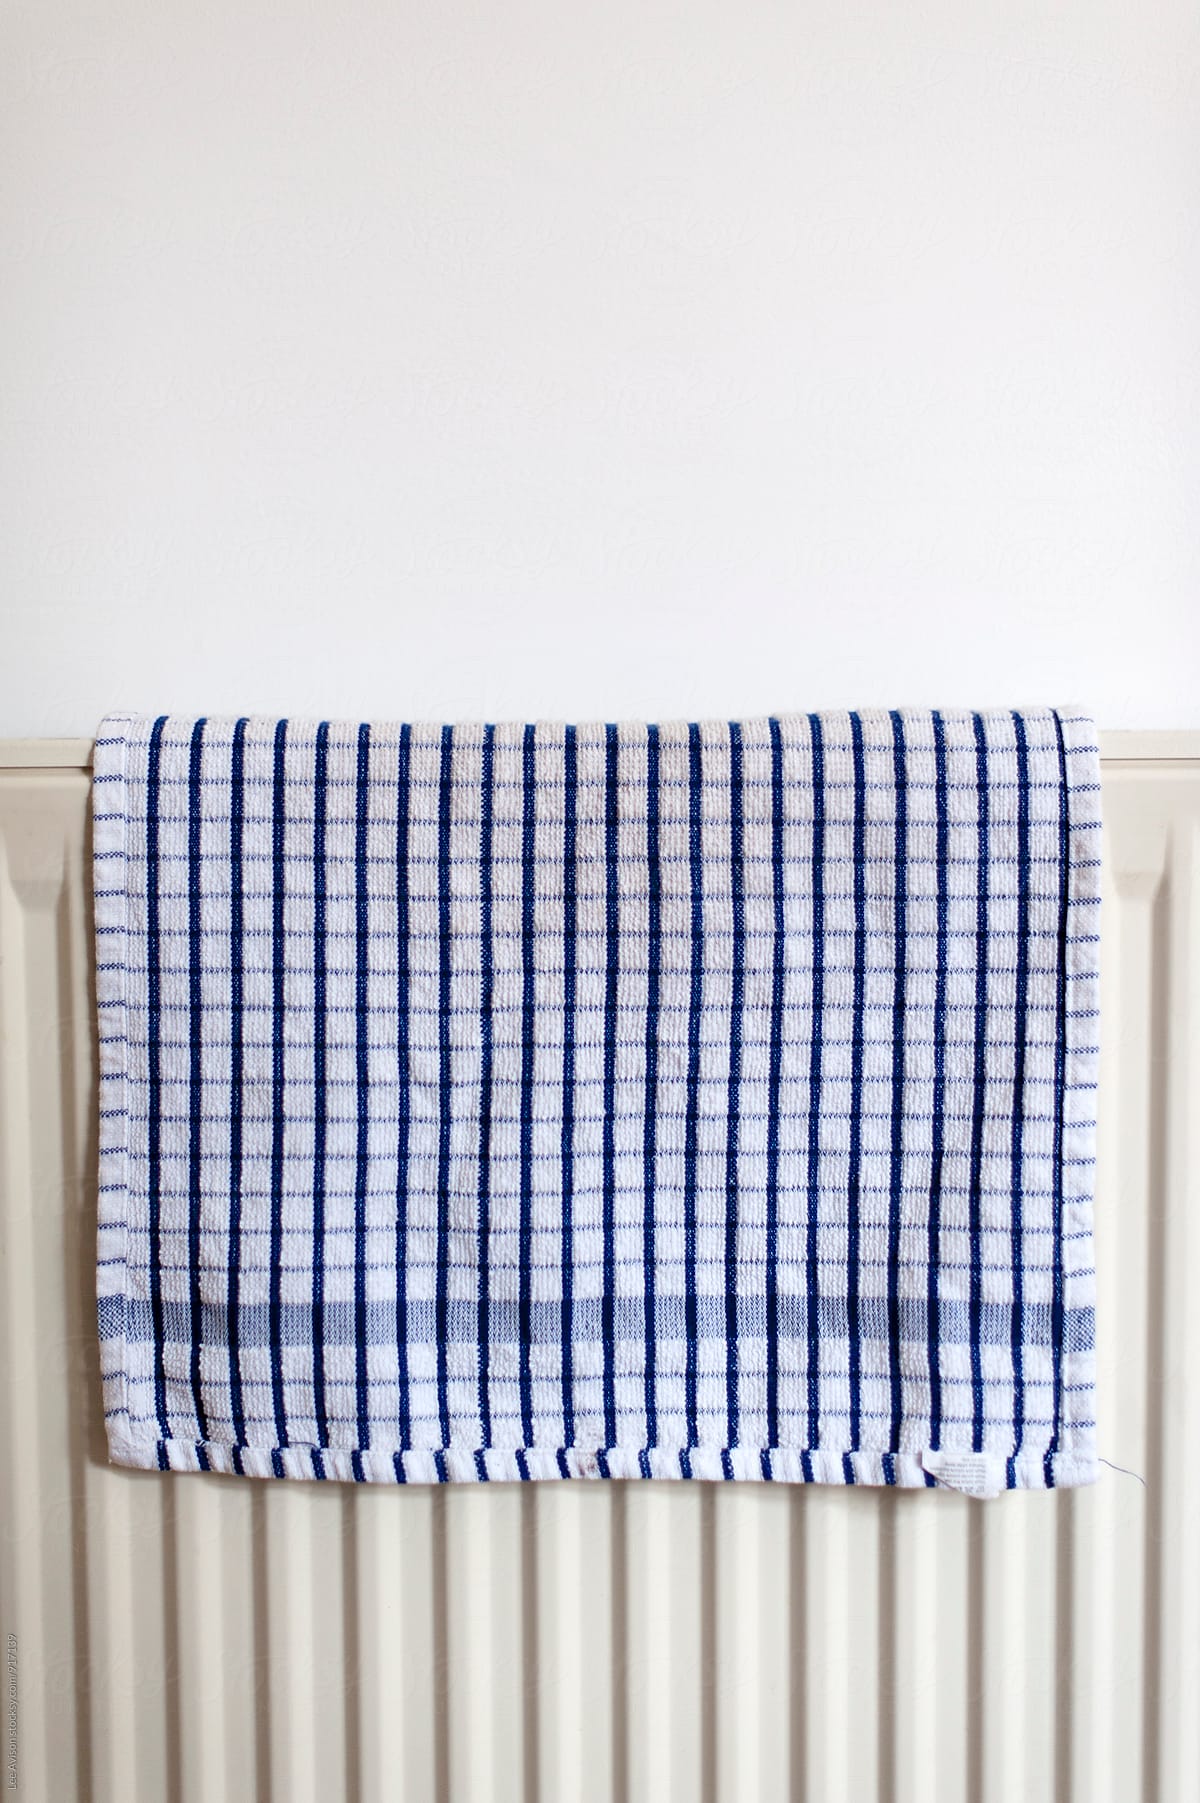 checkered tea towel on a radiator